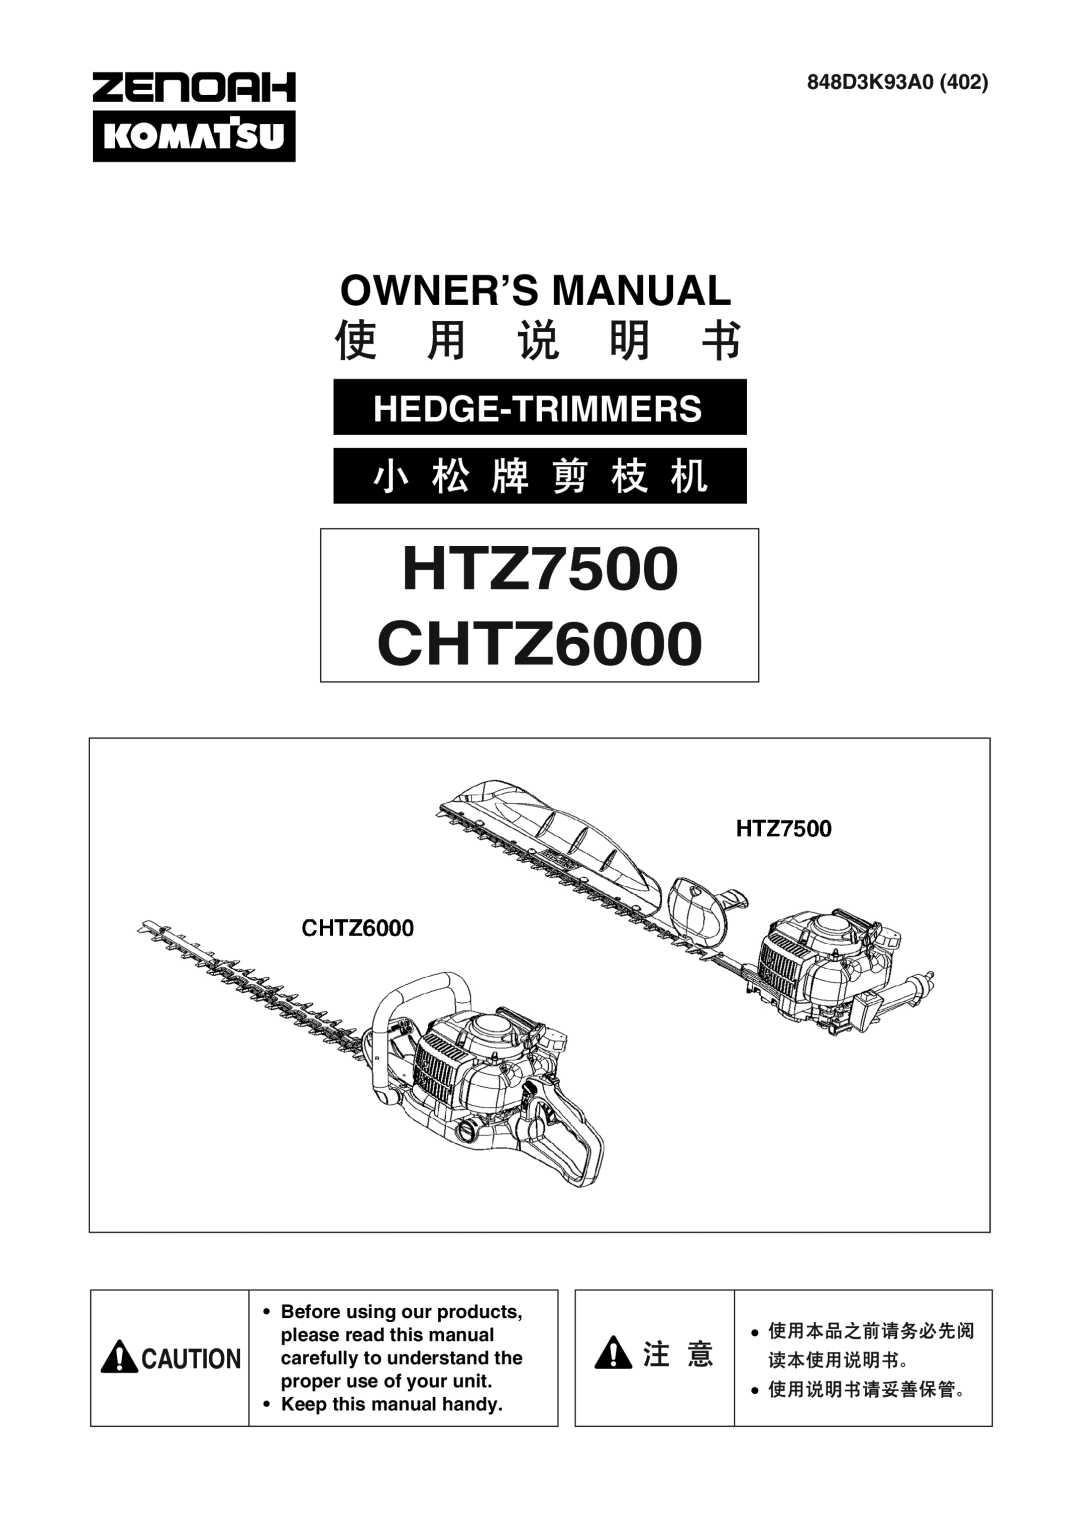 Zenoah CHTZ7500 owner manual 848D3K93A0, Keep this manual handy, HTZ7500 CHTZ6000, Hedge-Trimmers 